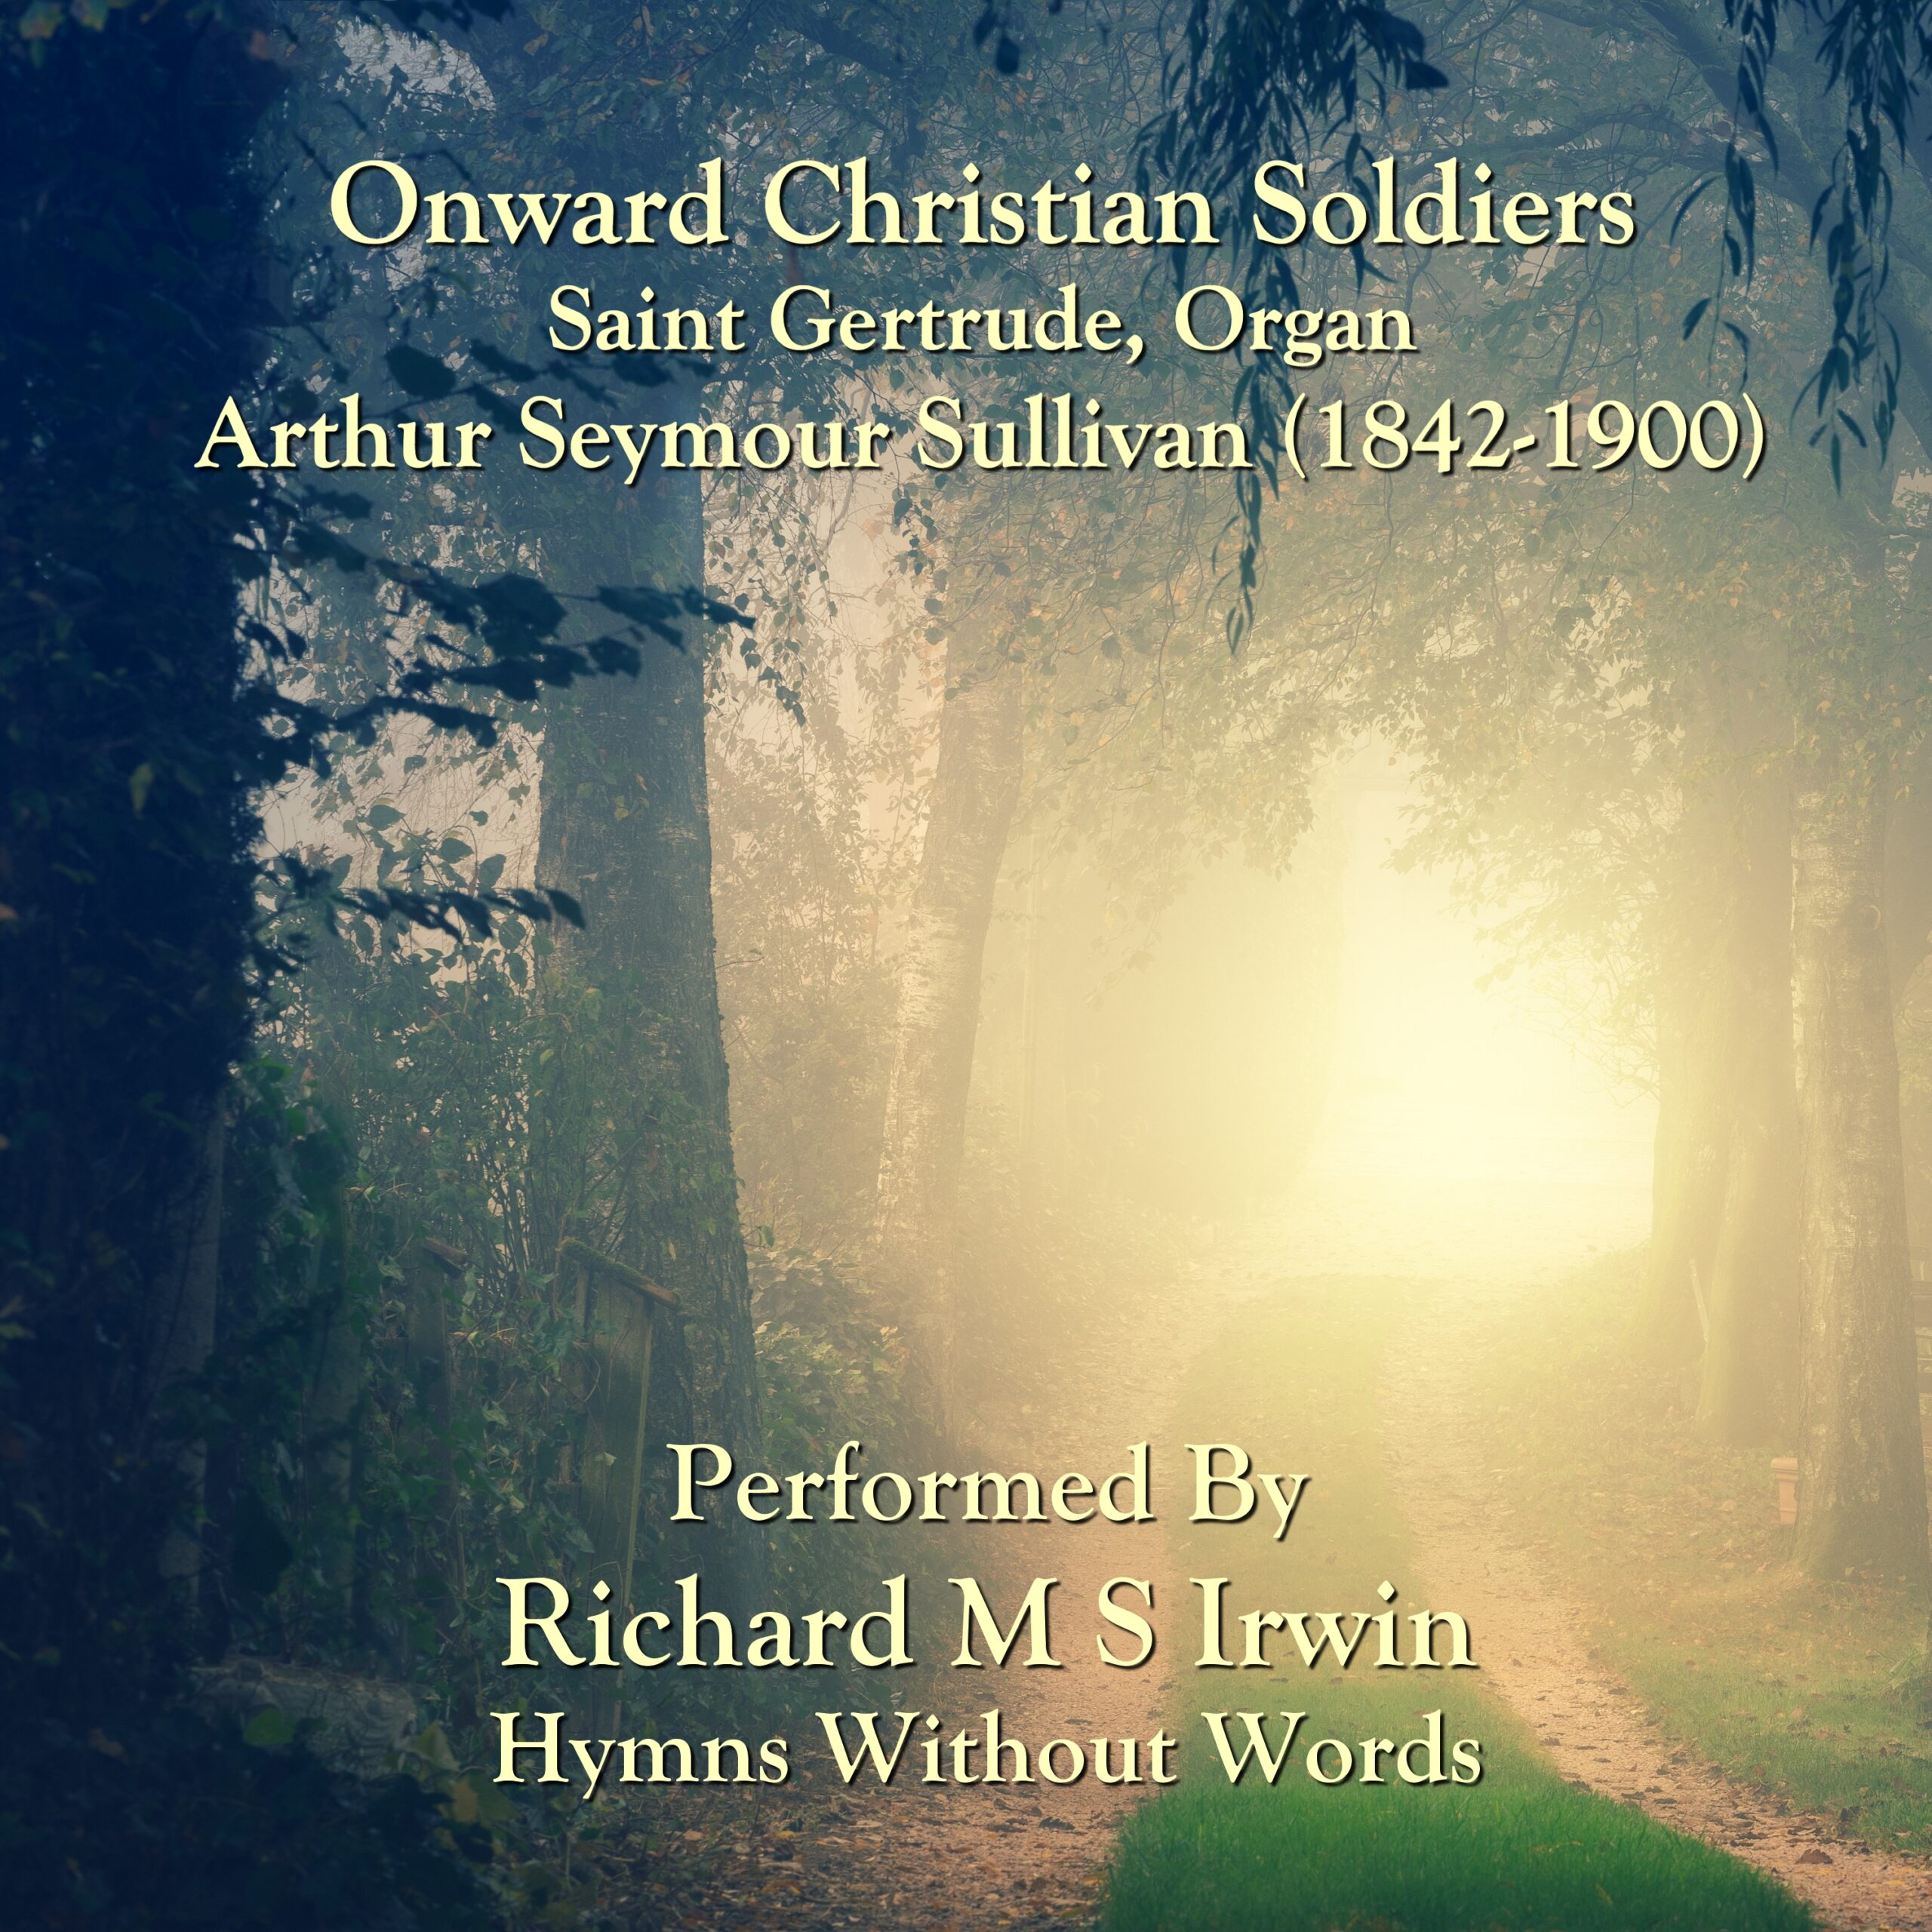 Onward Christian Soldiers (Saint Gertrude, Organ, 5 Verses)